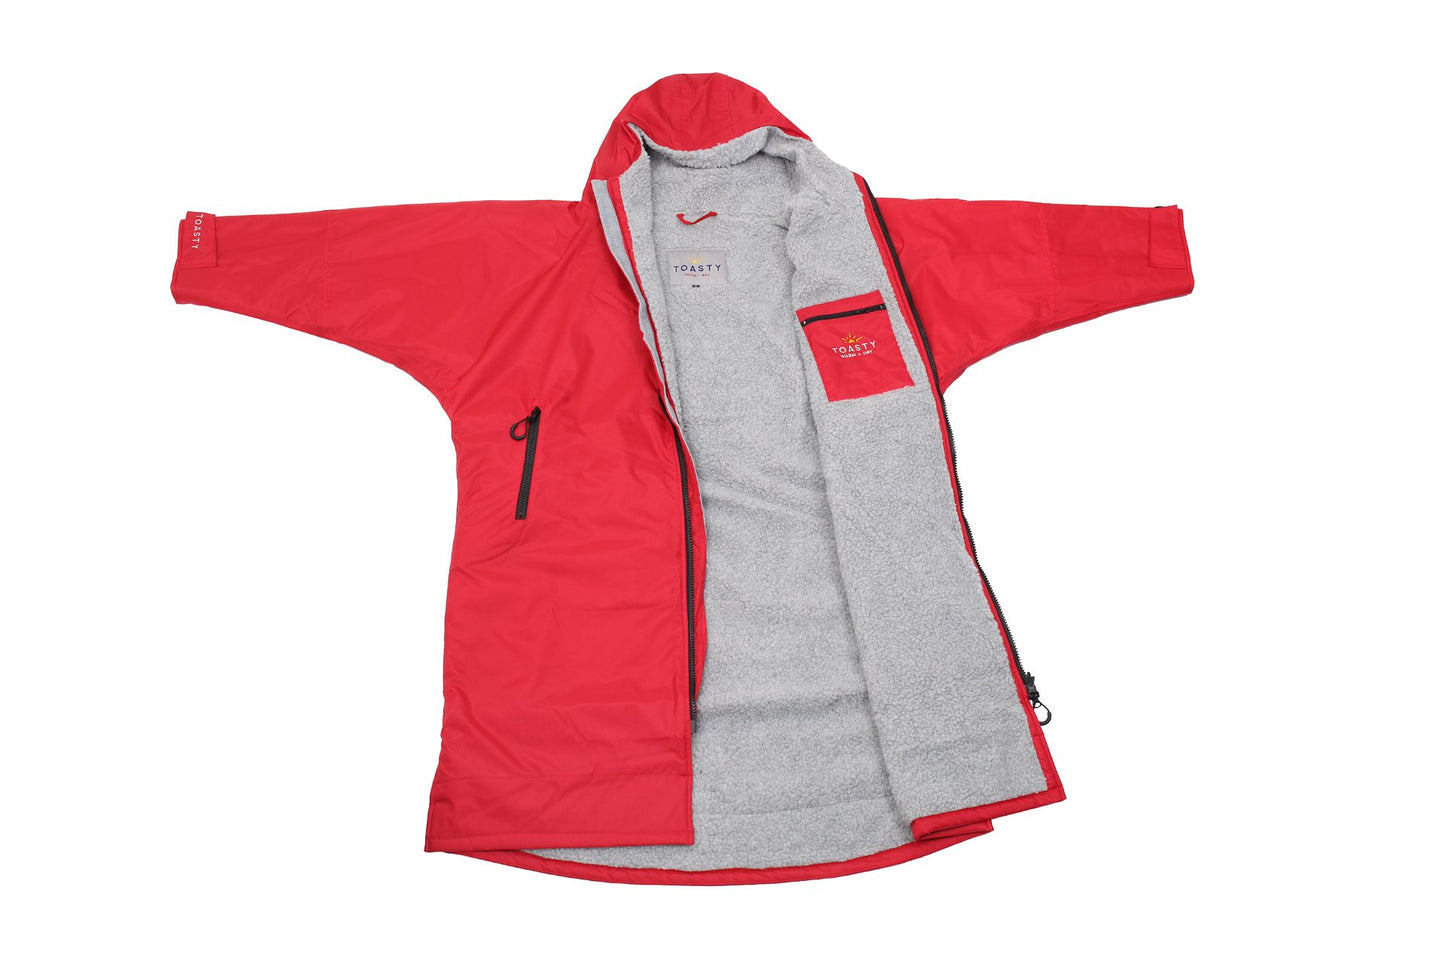 Toasty Ultimate weatherproof jacket change robe  in red open